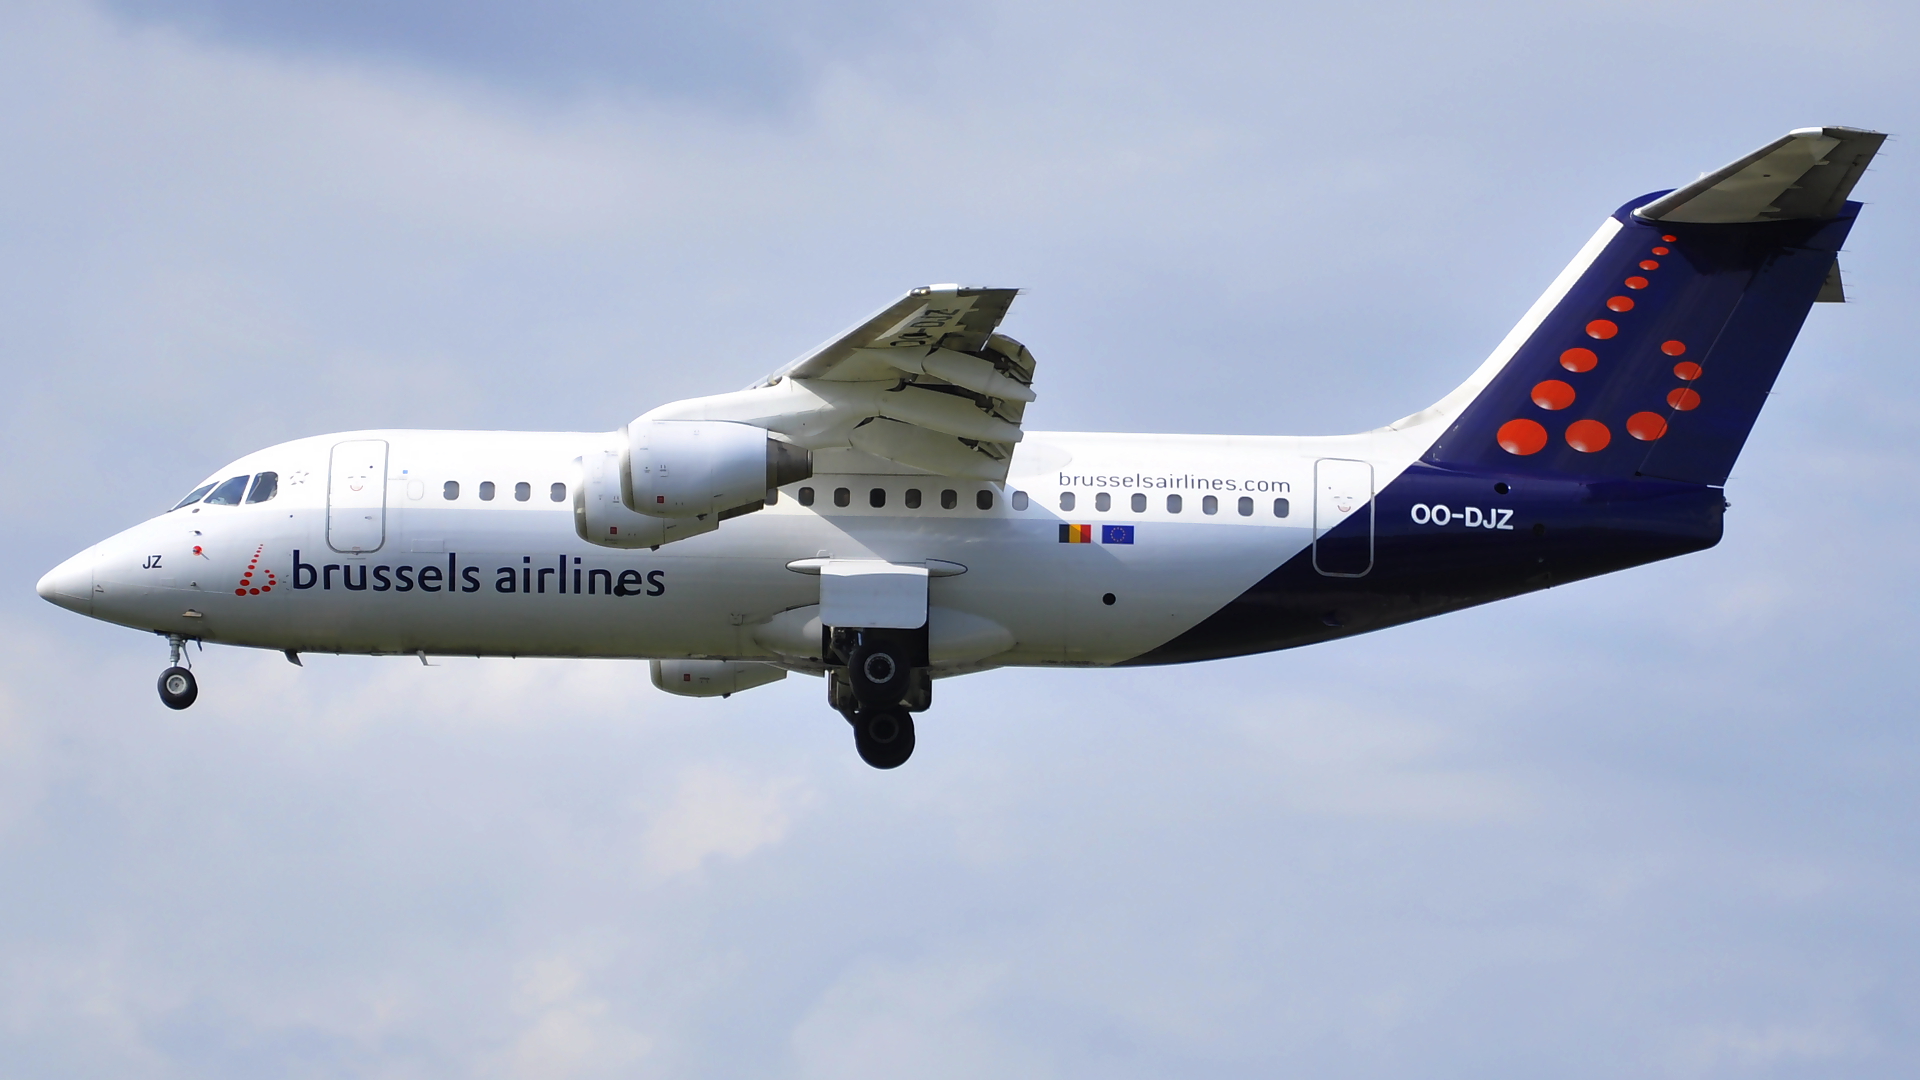 OO-DJZ ✈ Brussels Airlines British Aerospace RJ85 @ London-Heathrow